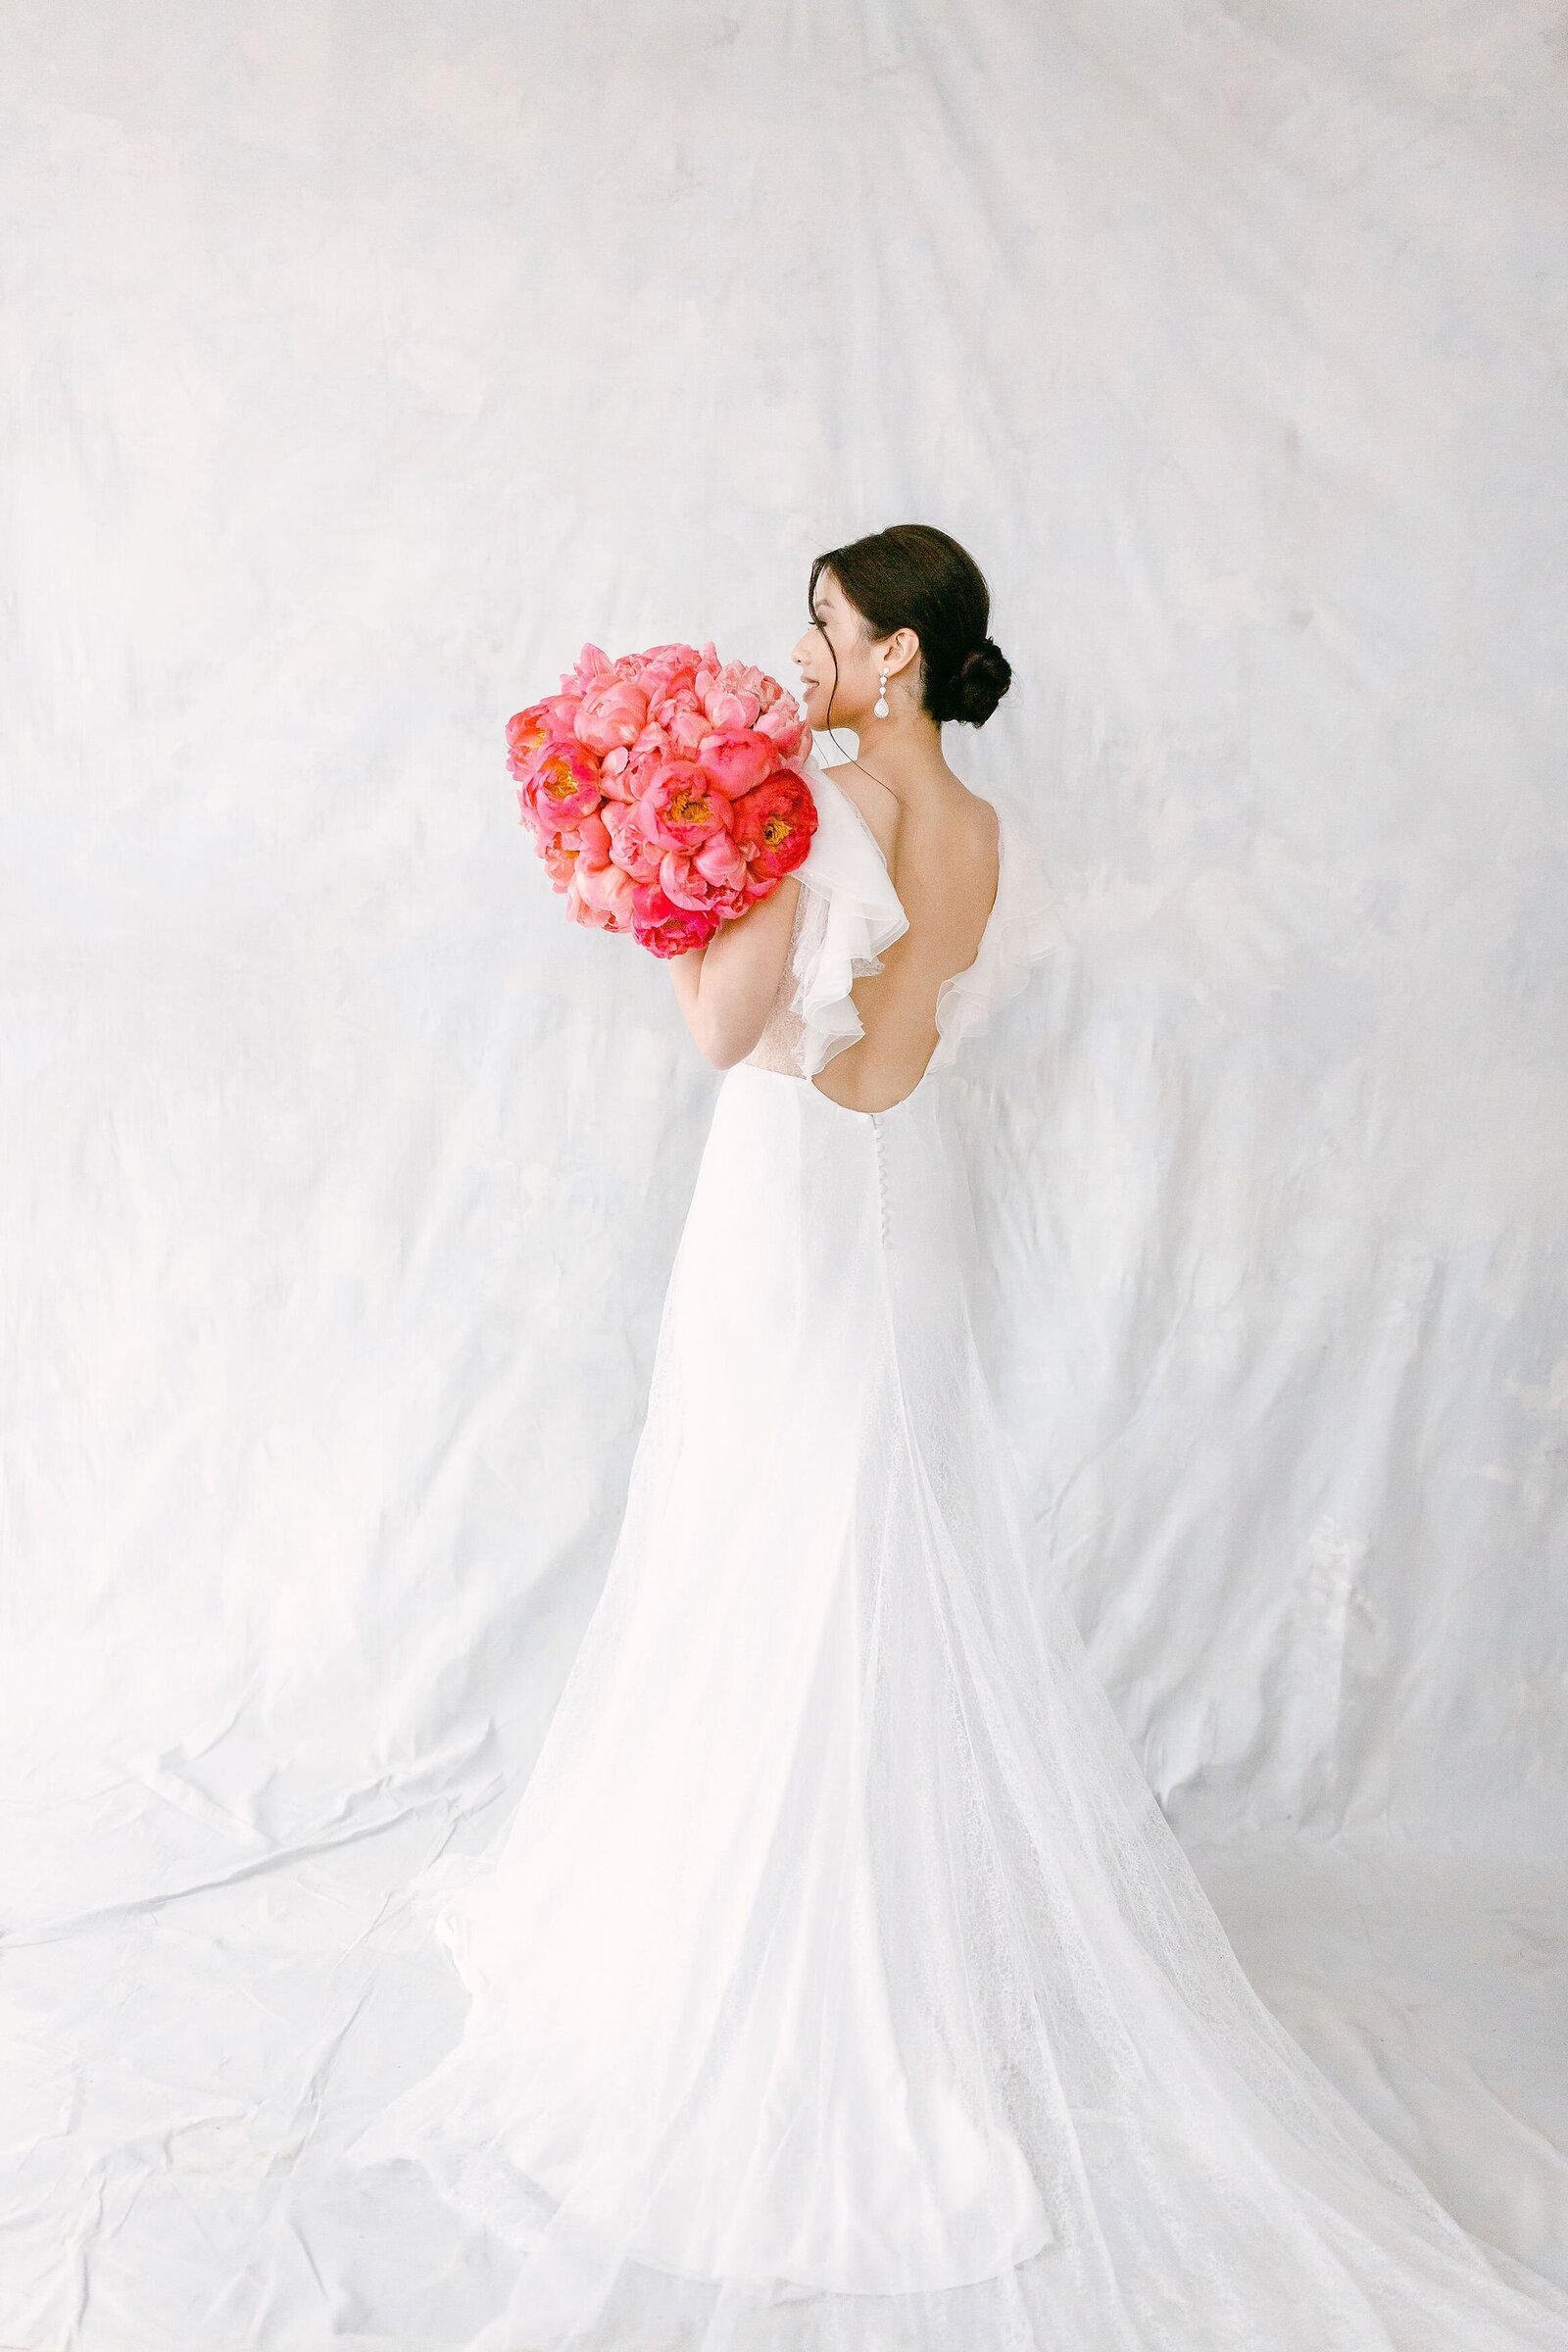 607TeengandChrisSingaporePre-WeddingPhotography